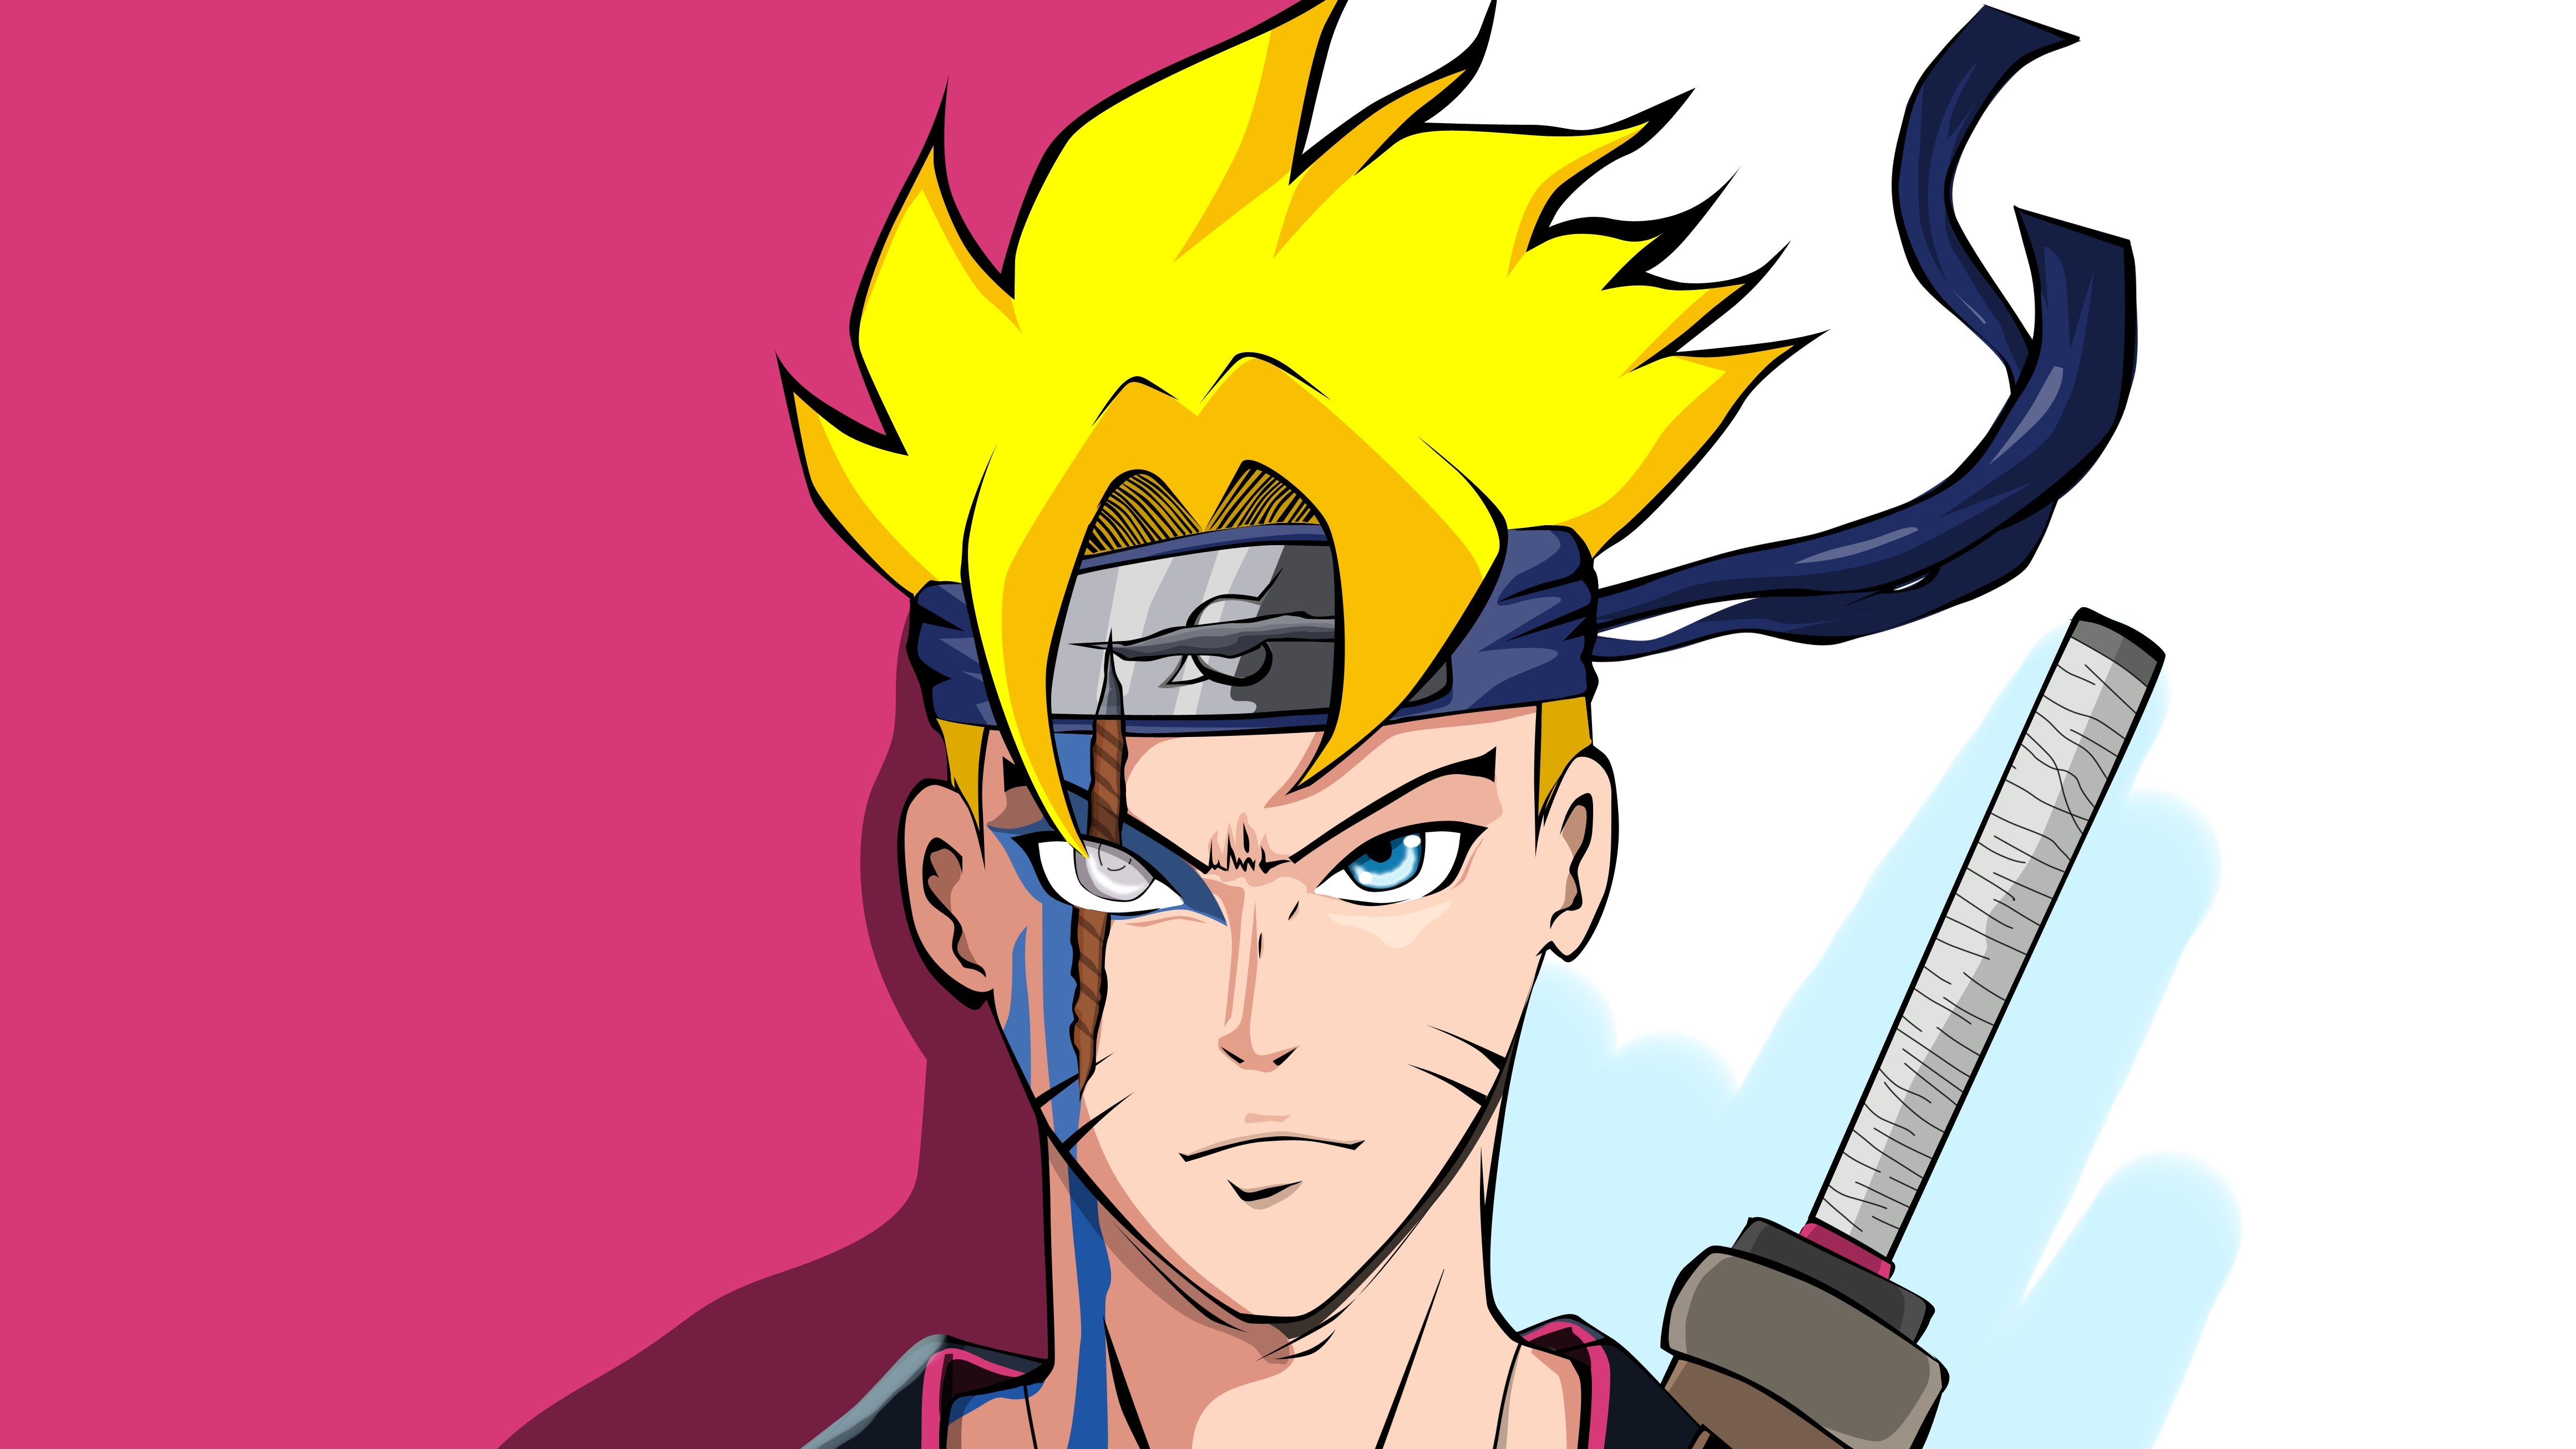 Fondos de pantalla Anime Boruto Uzumaki de Boruto: Naruto Next Generations